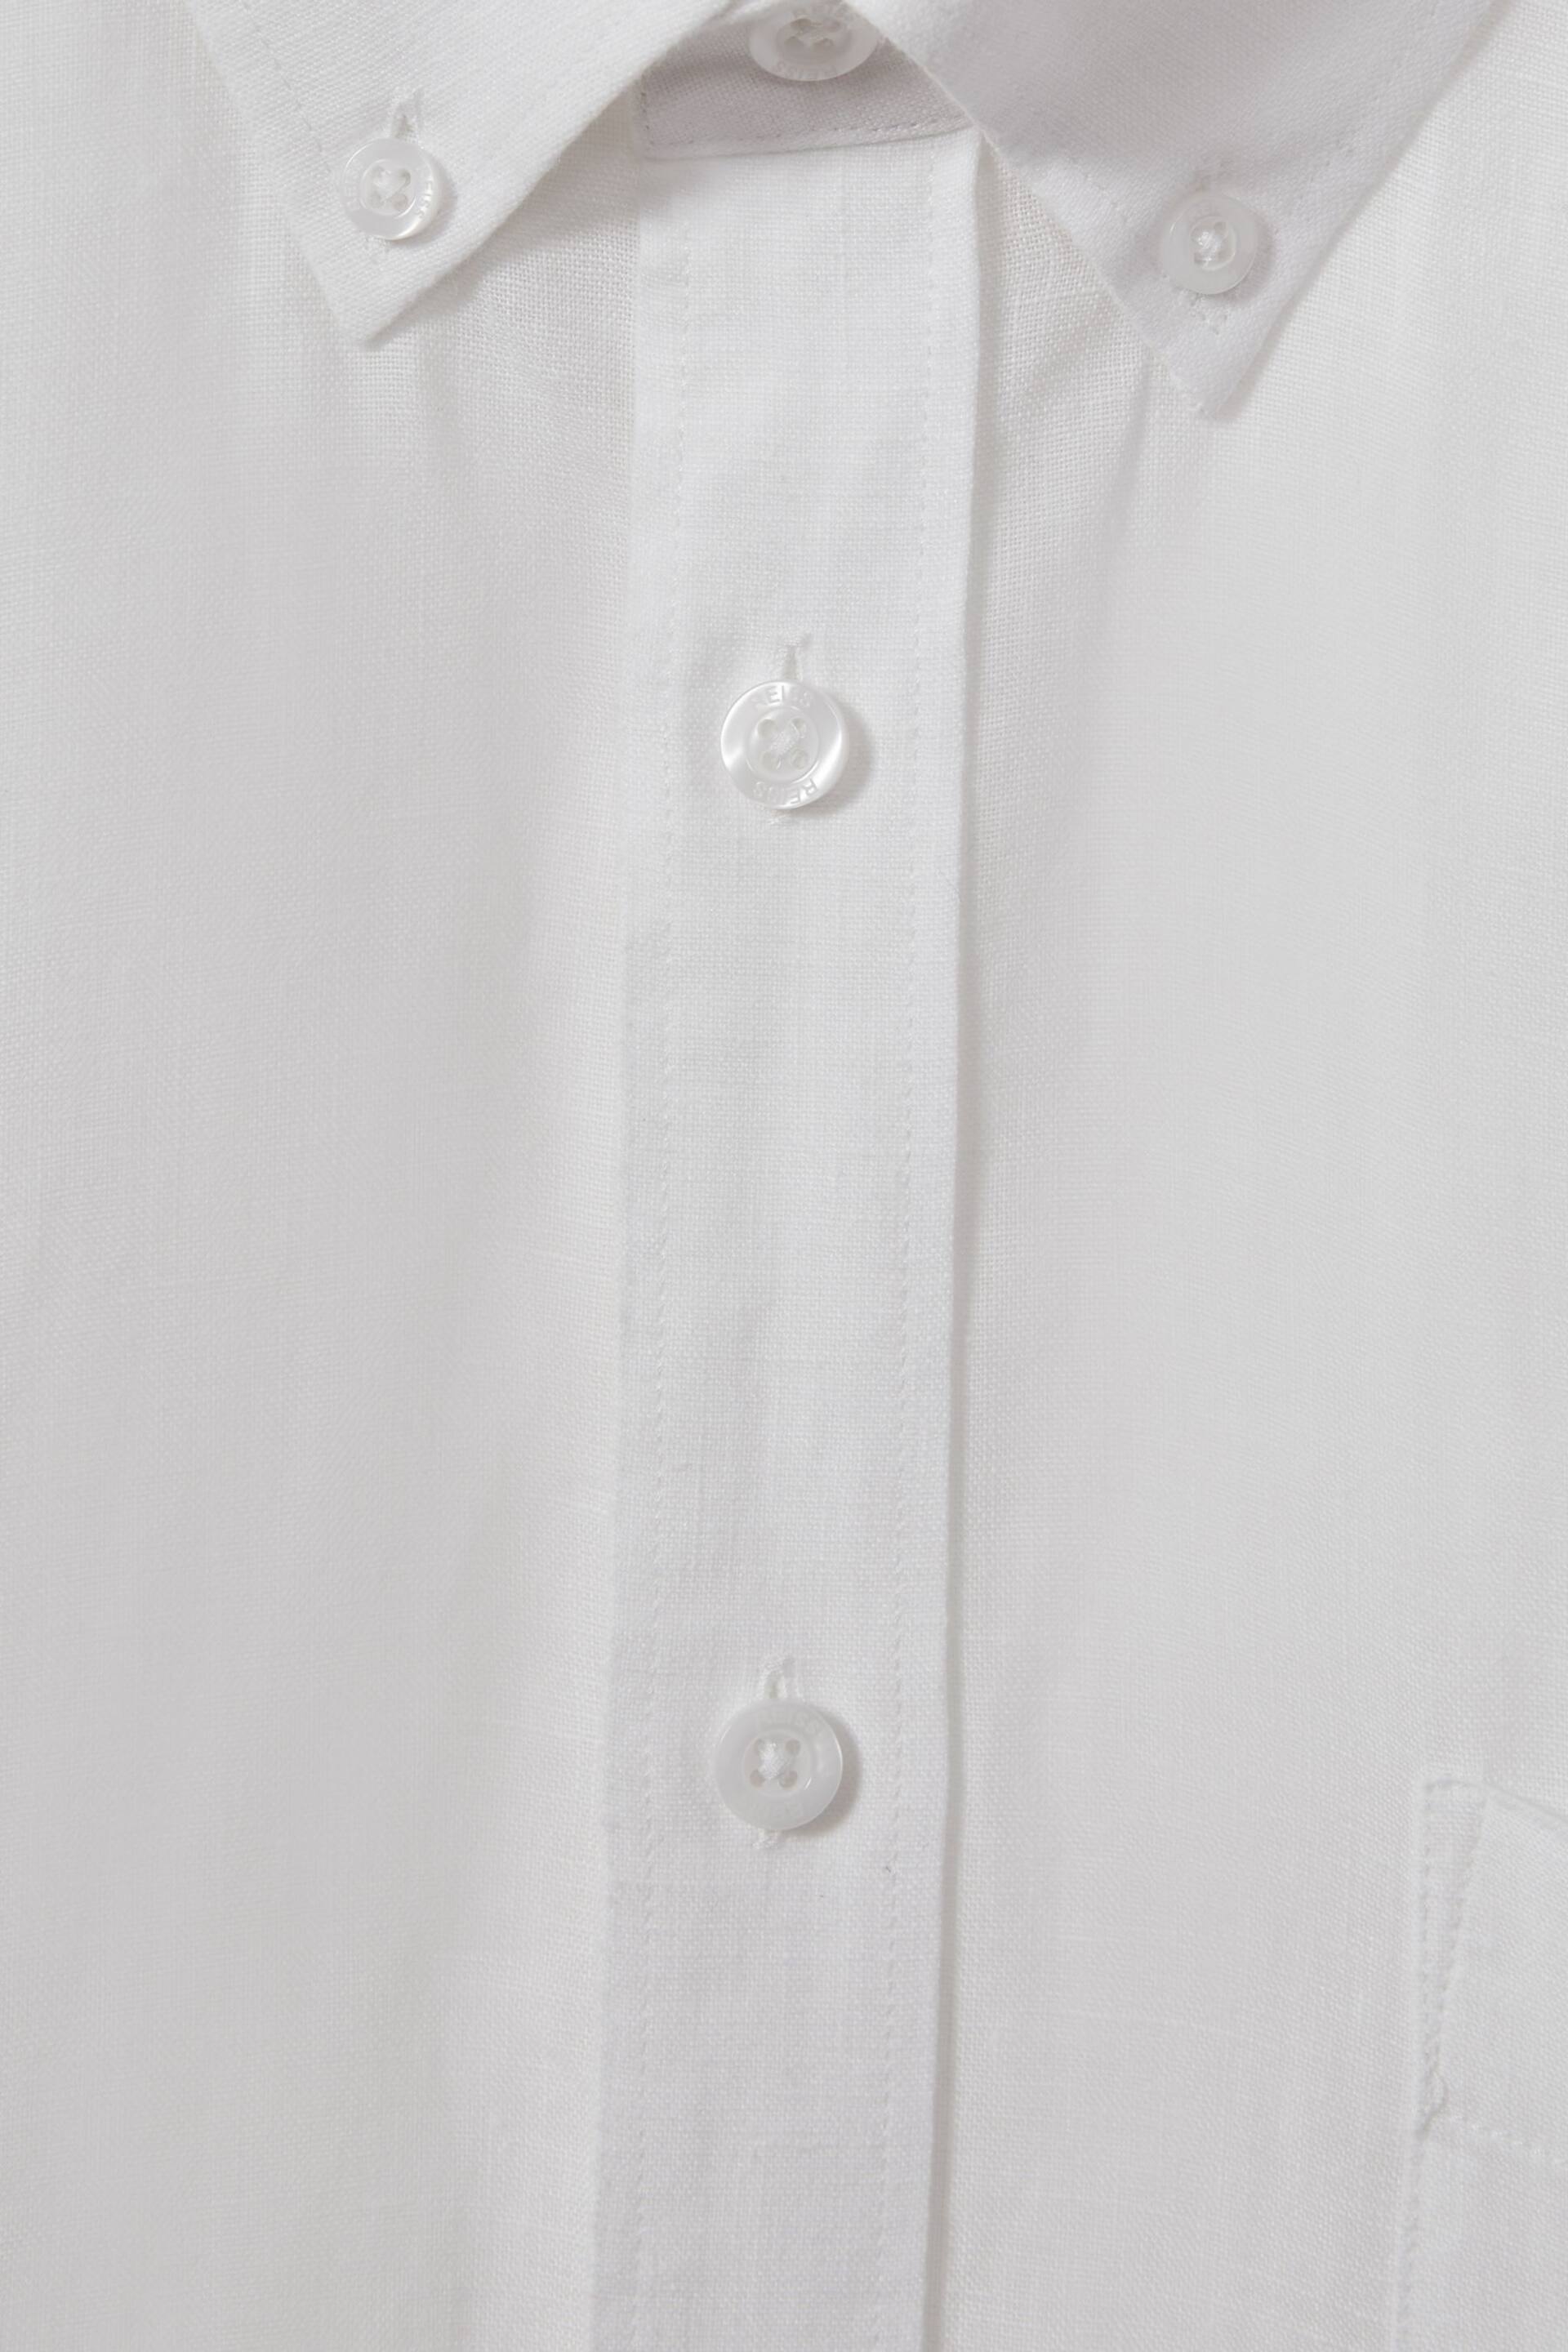 Reiss White Queens Linen Button-Down Collar Shirt - Image 4 of 4